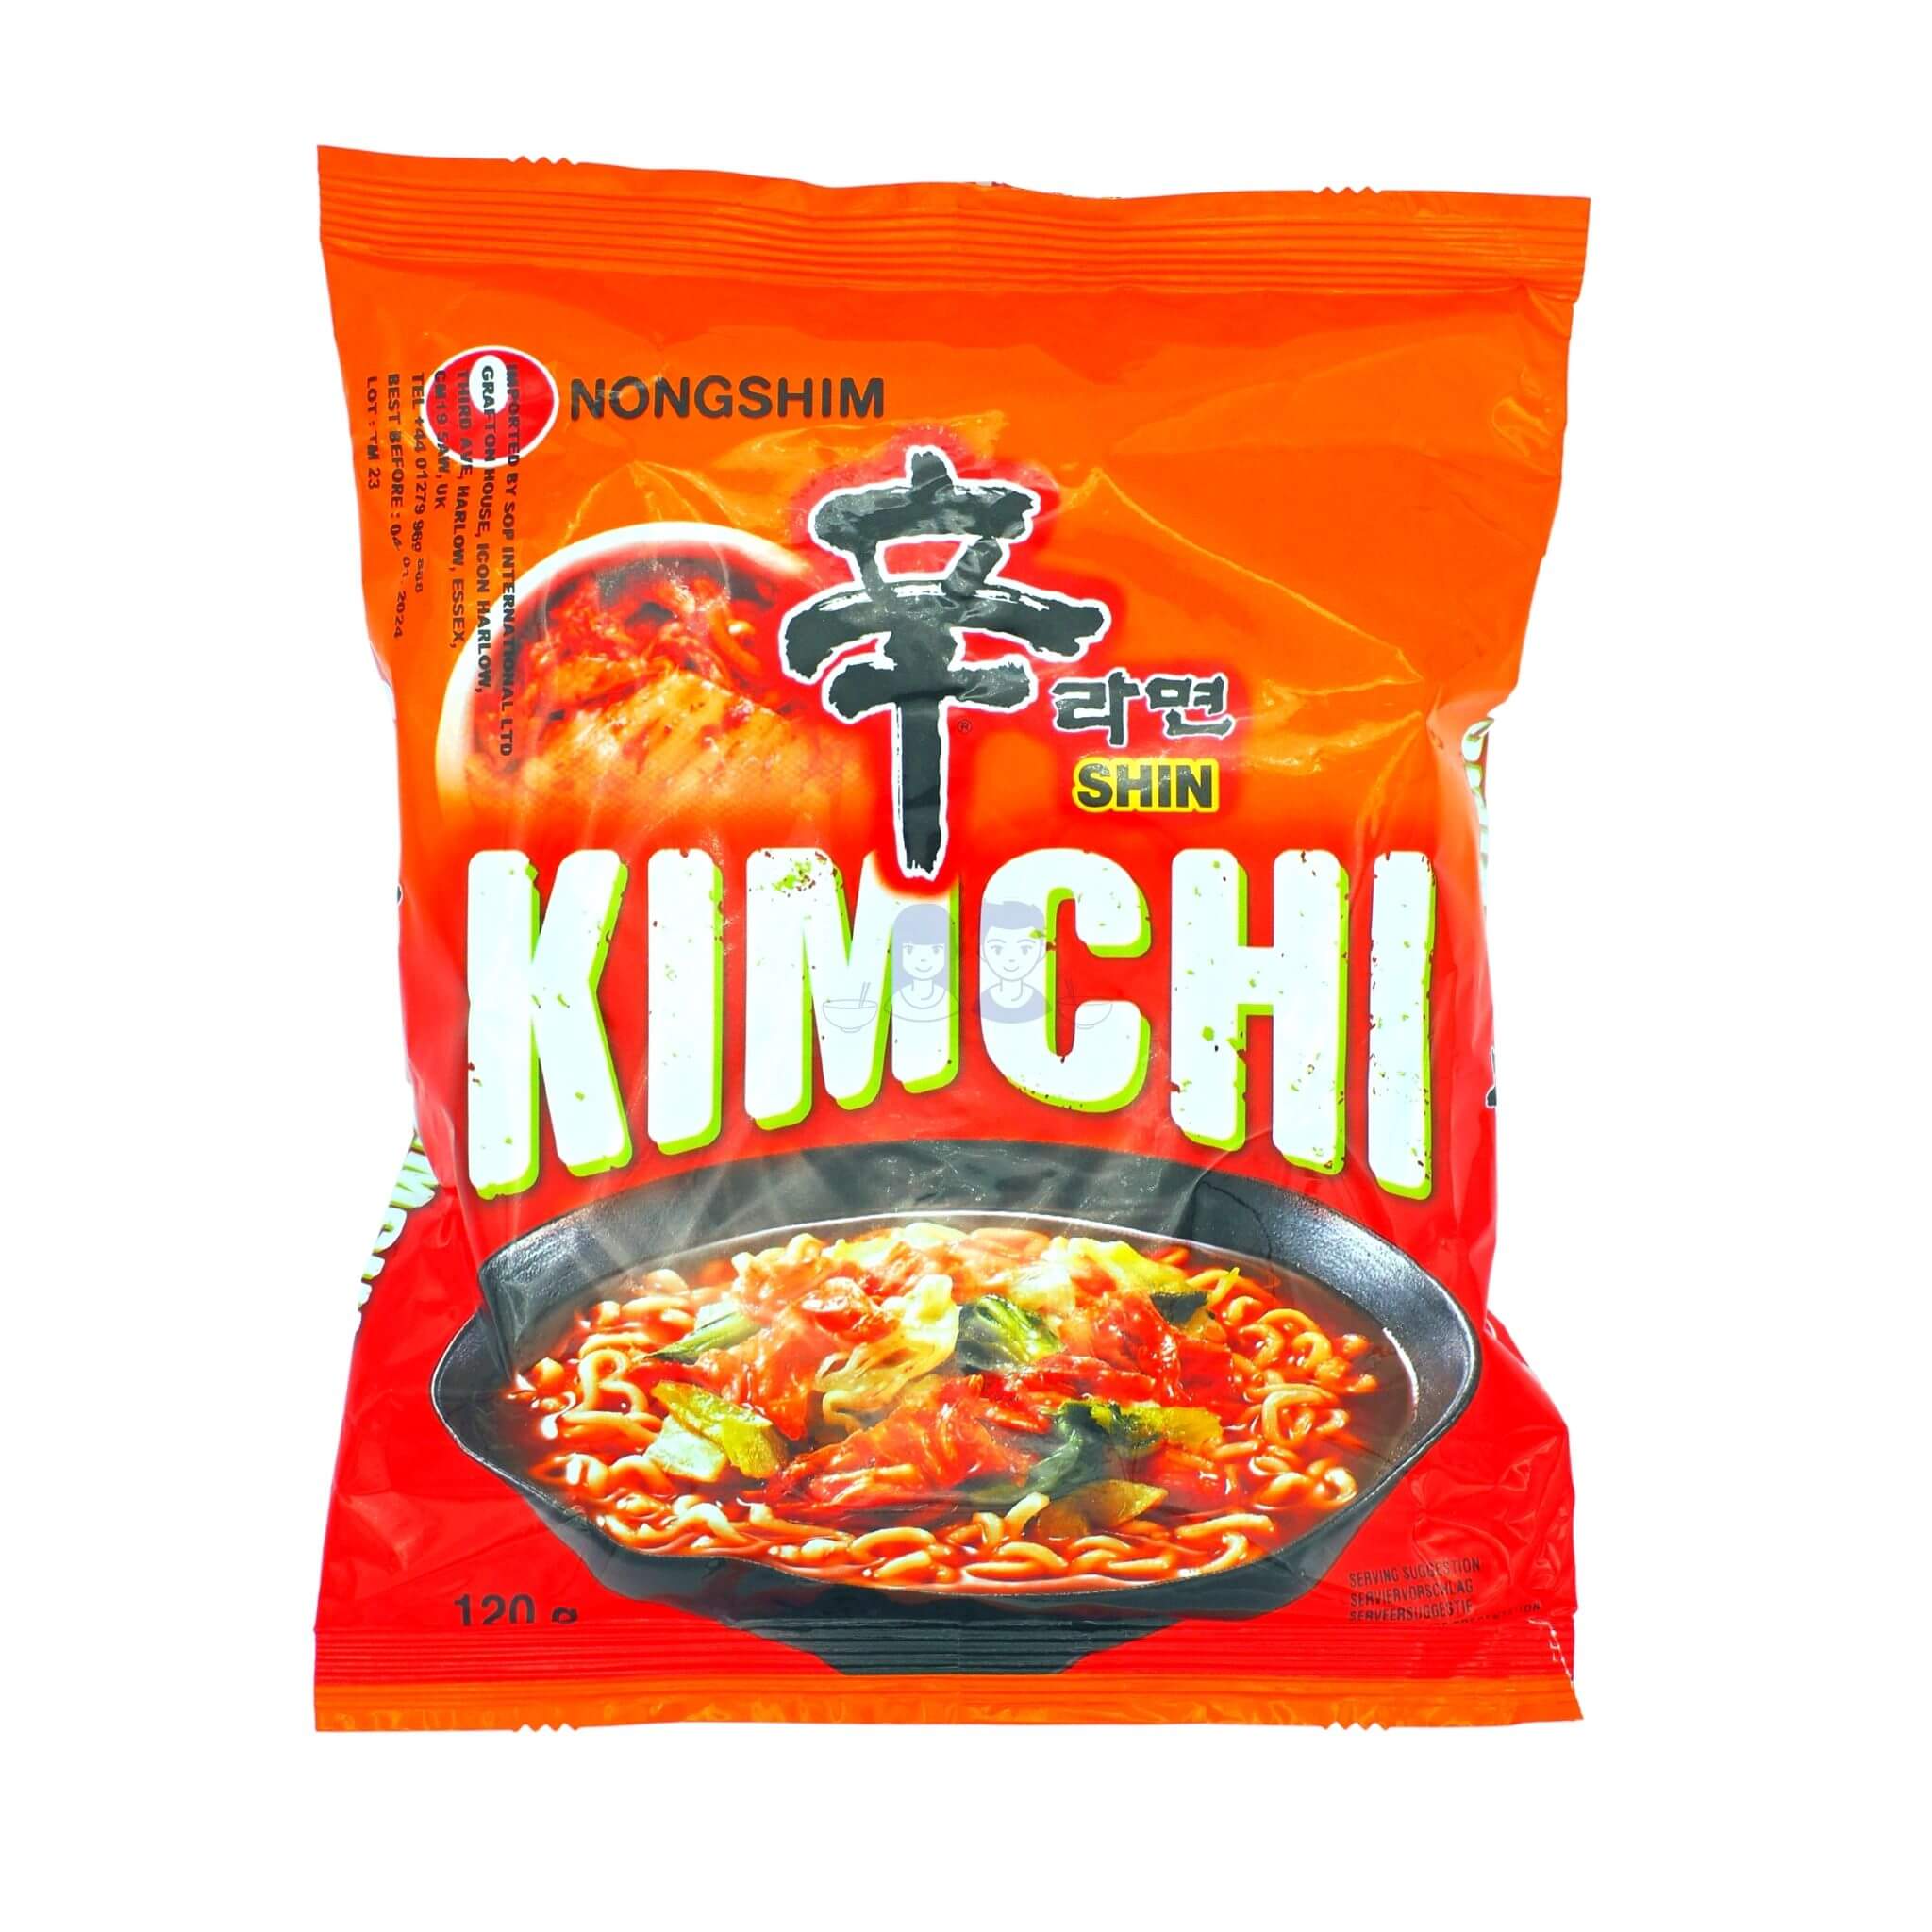 Nong Shim Instant Noodles Shin Ramyun 120 g - Fast shipping in